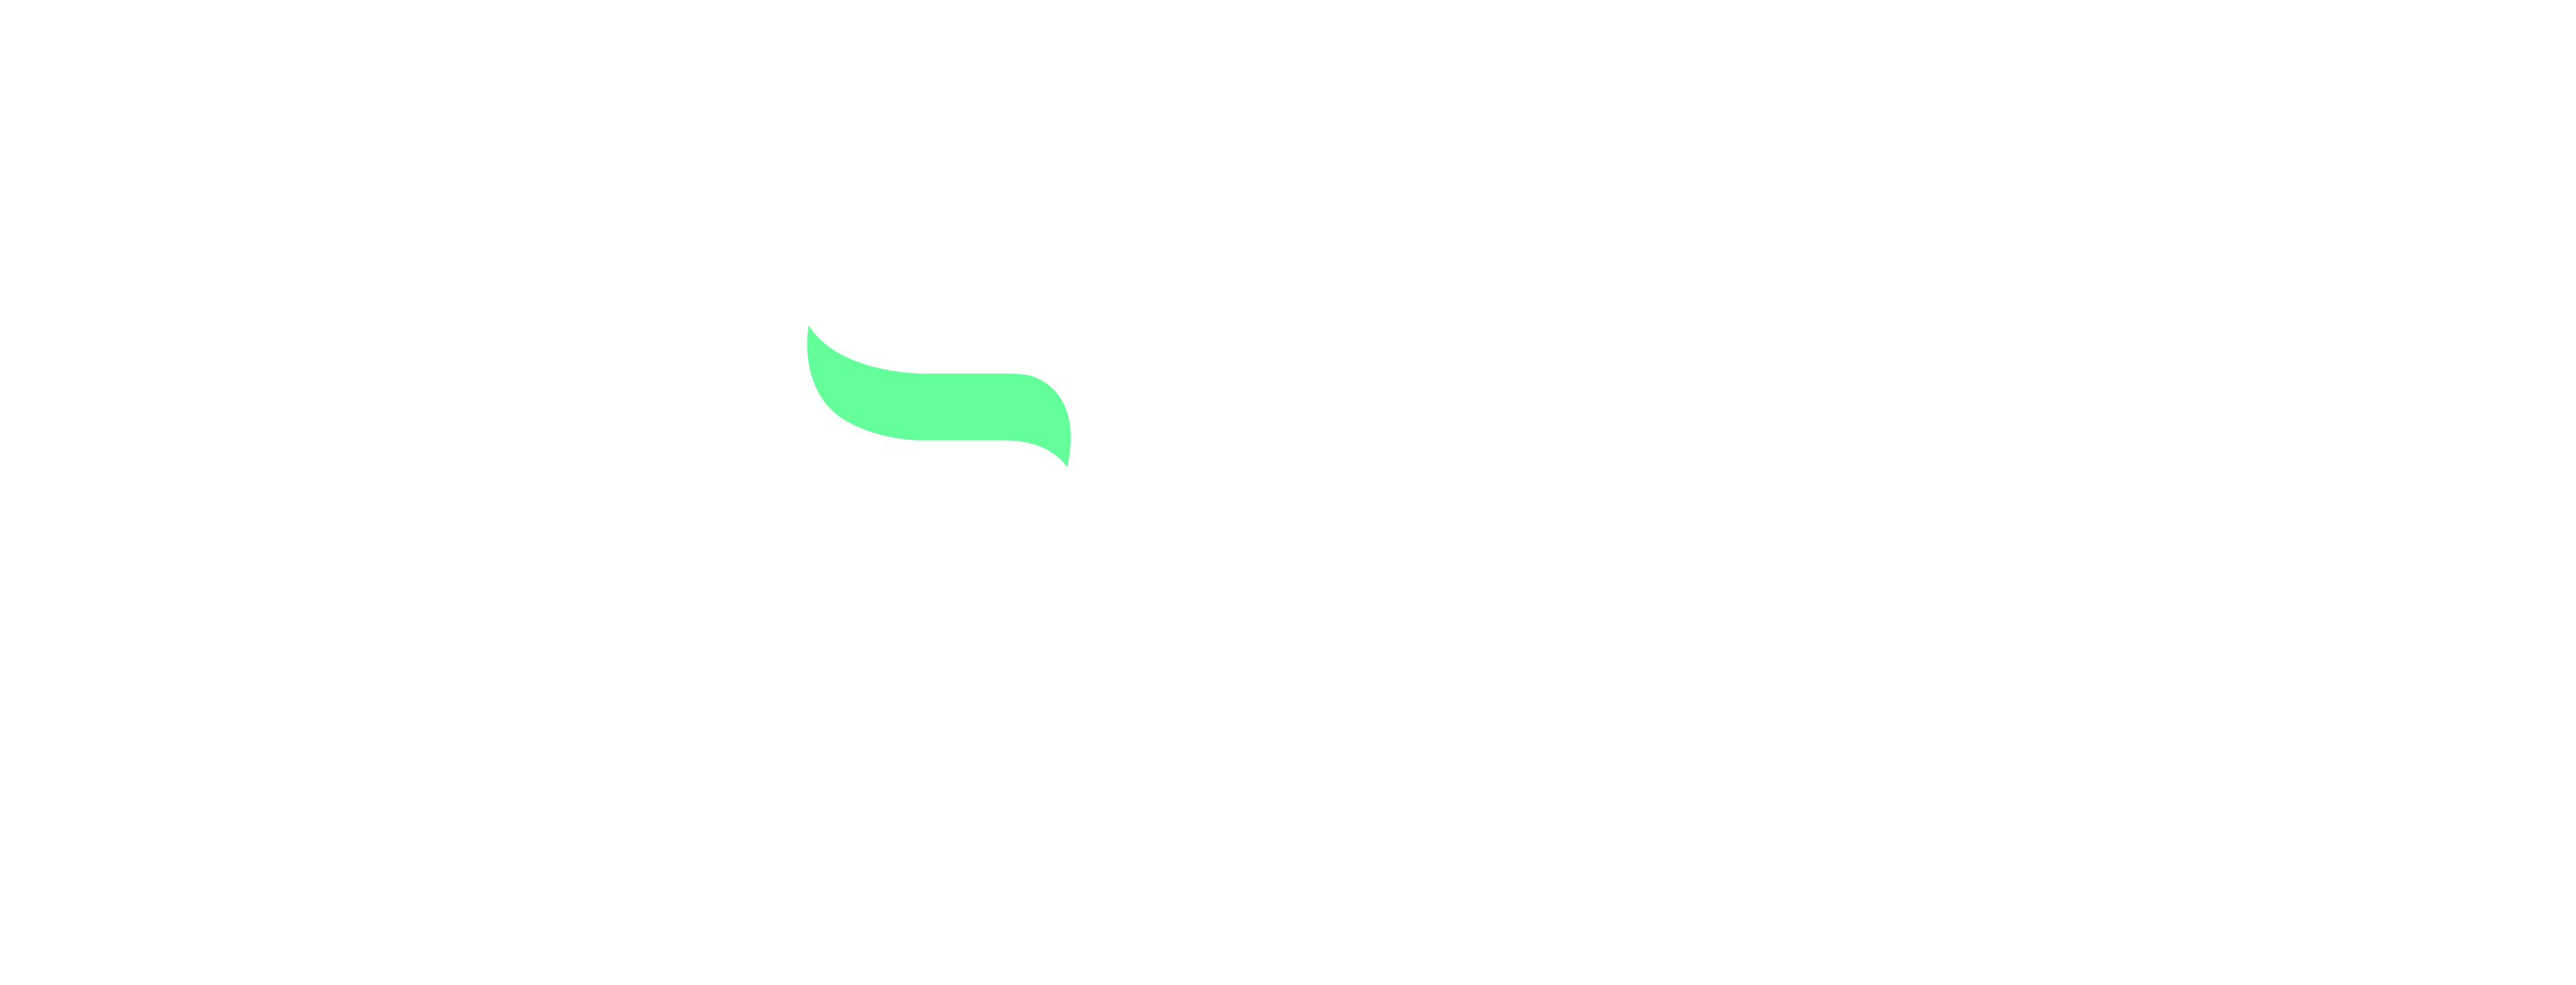 PlantScraper